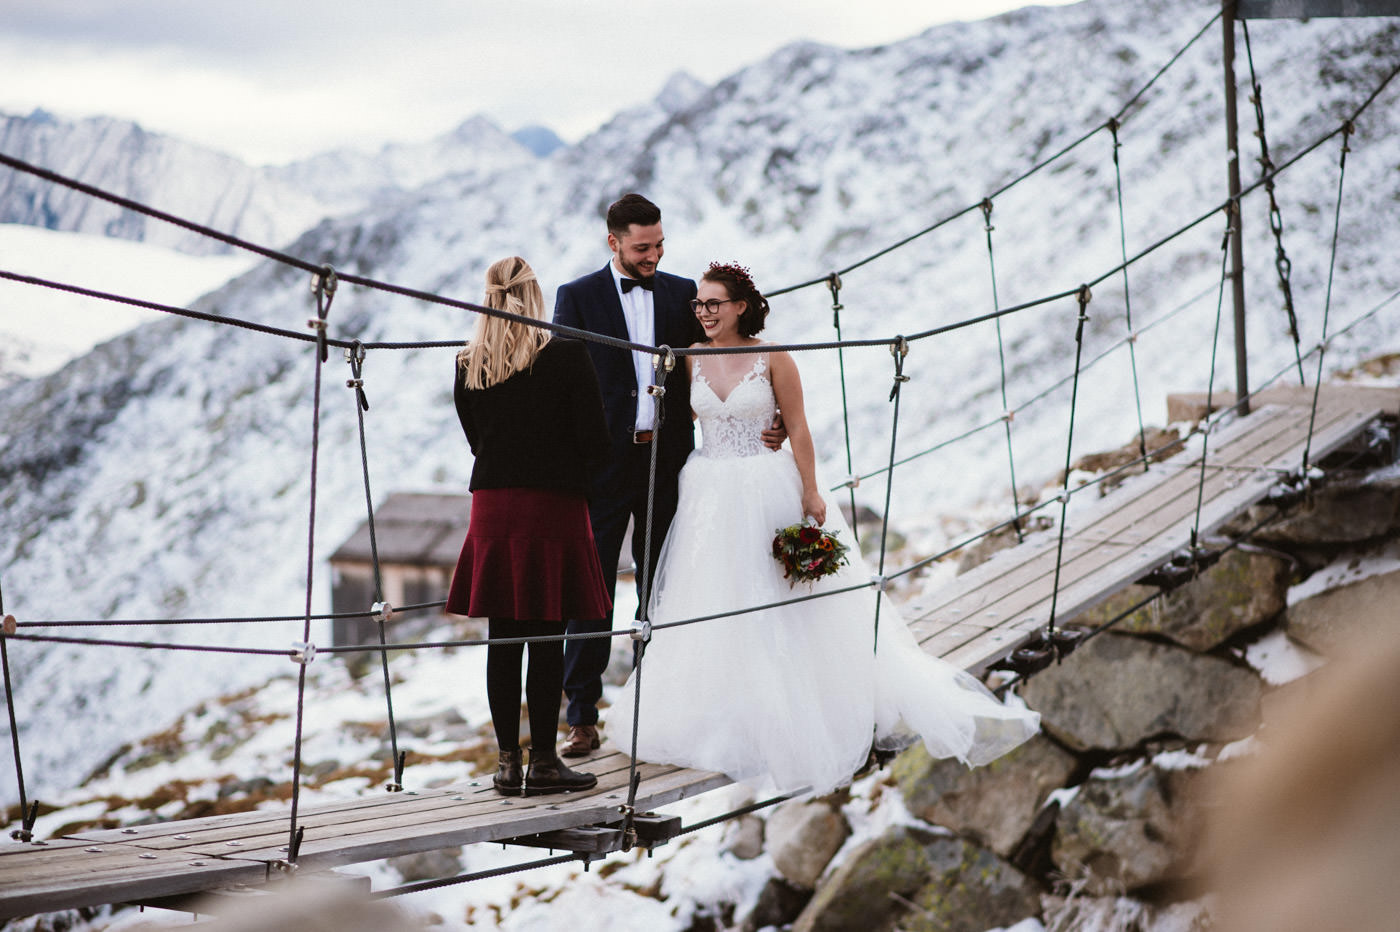 Wedding celebrant on a rope bridge - Adventurous Elopement in Austria